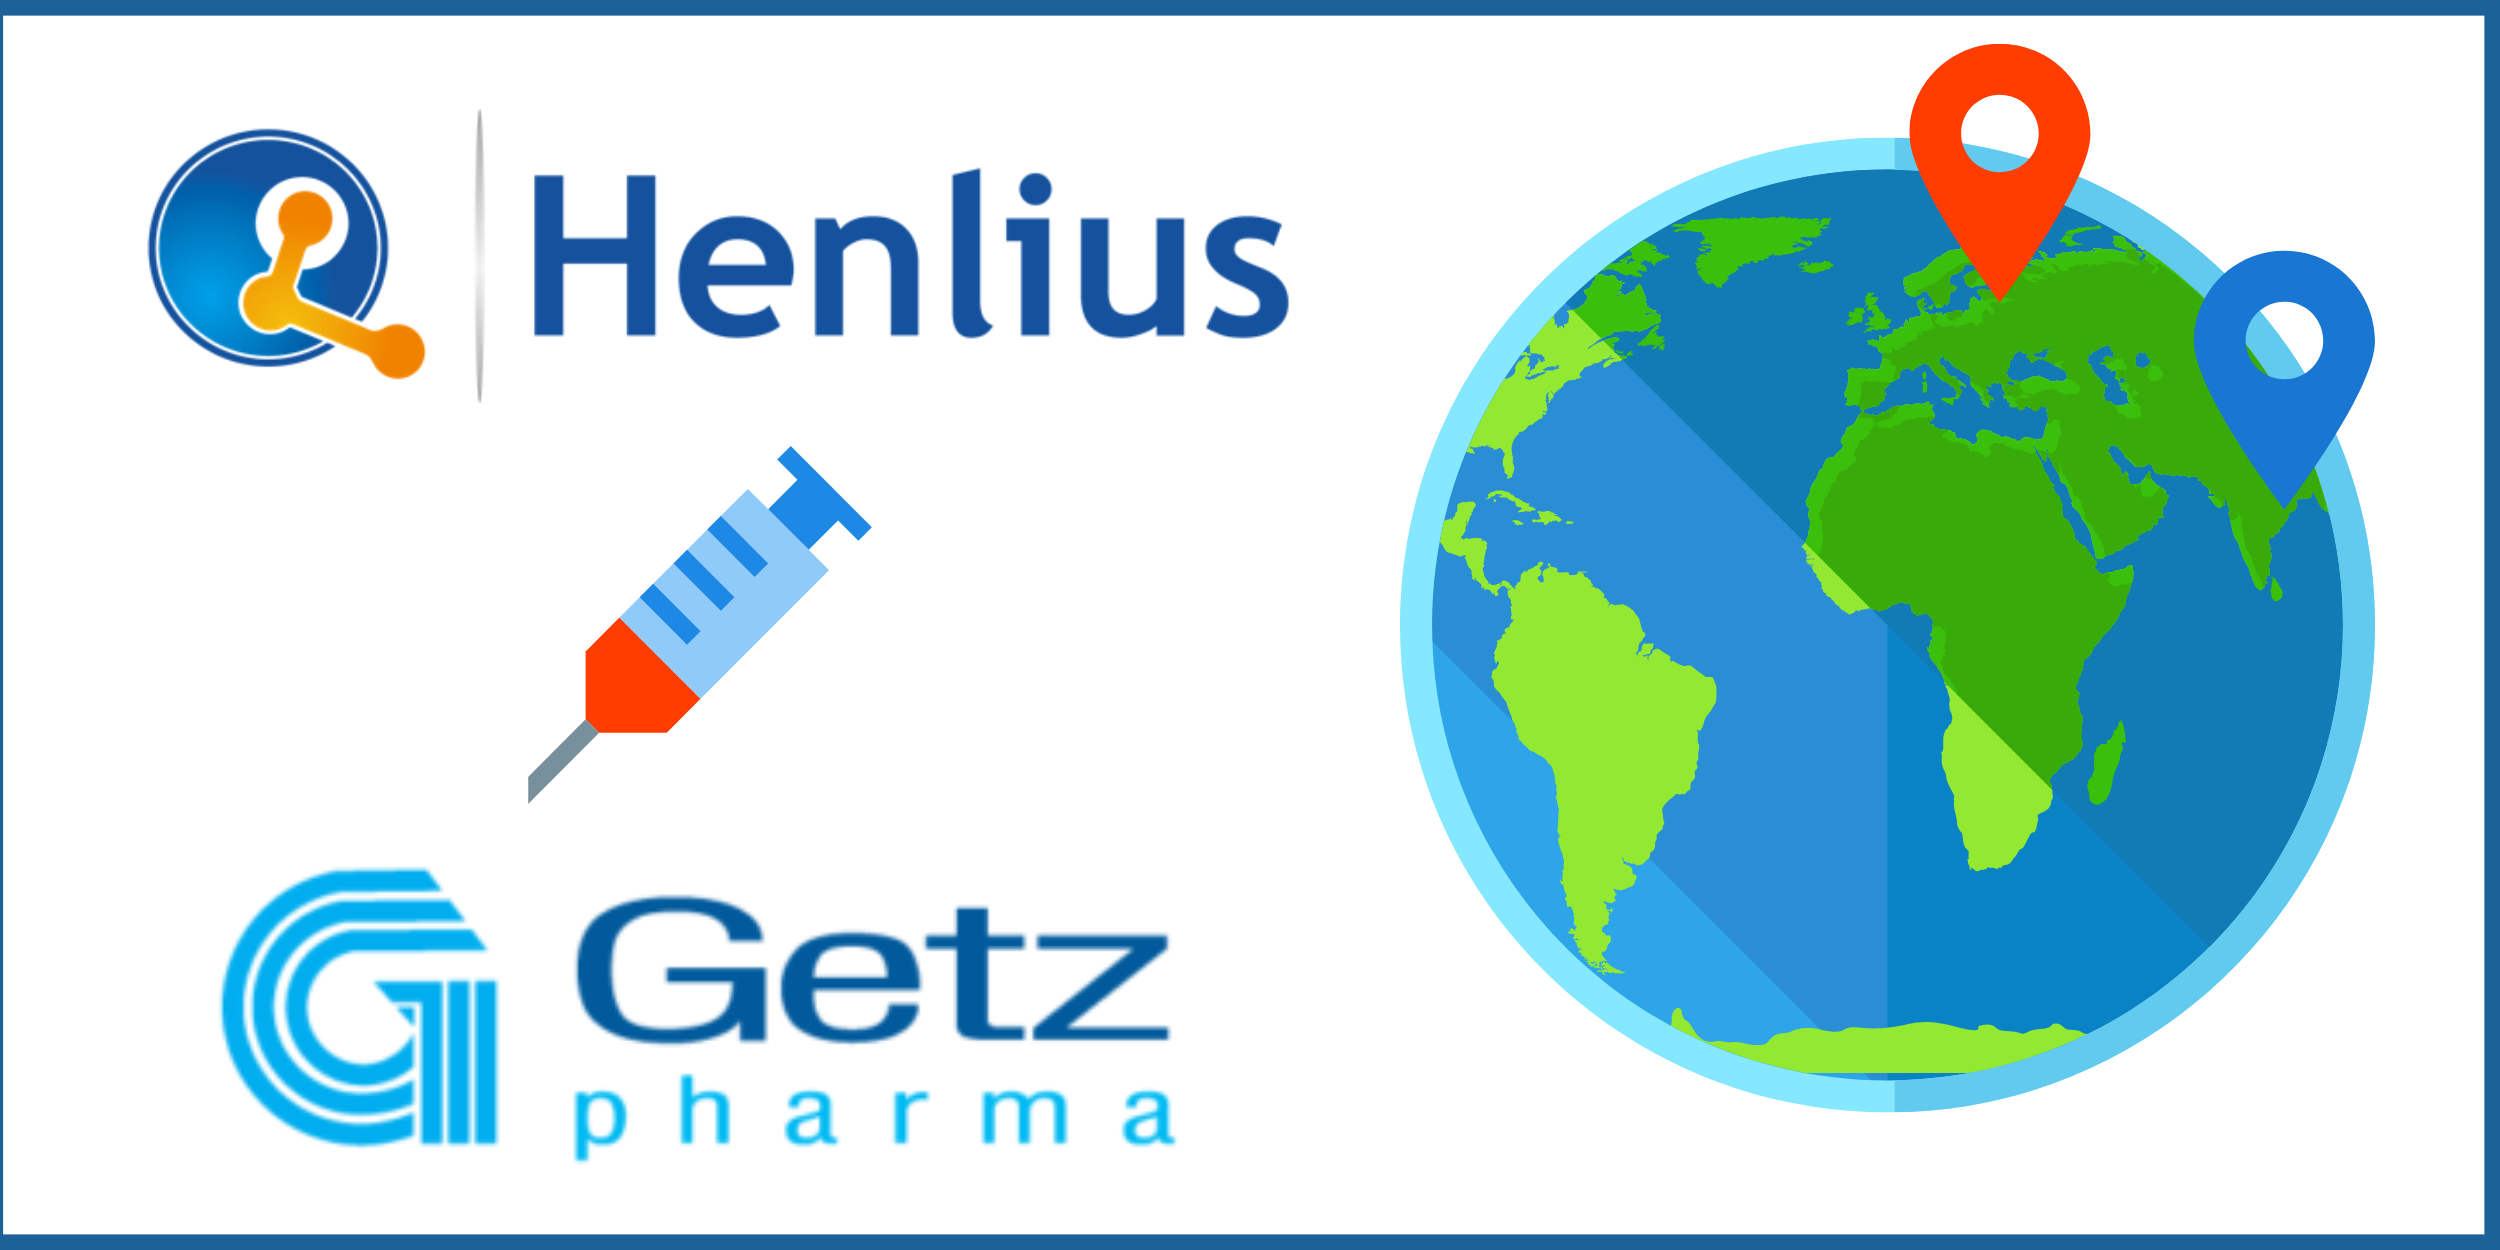 Shanghai Henlius Biotech and Getz Pharma logos